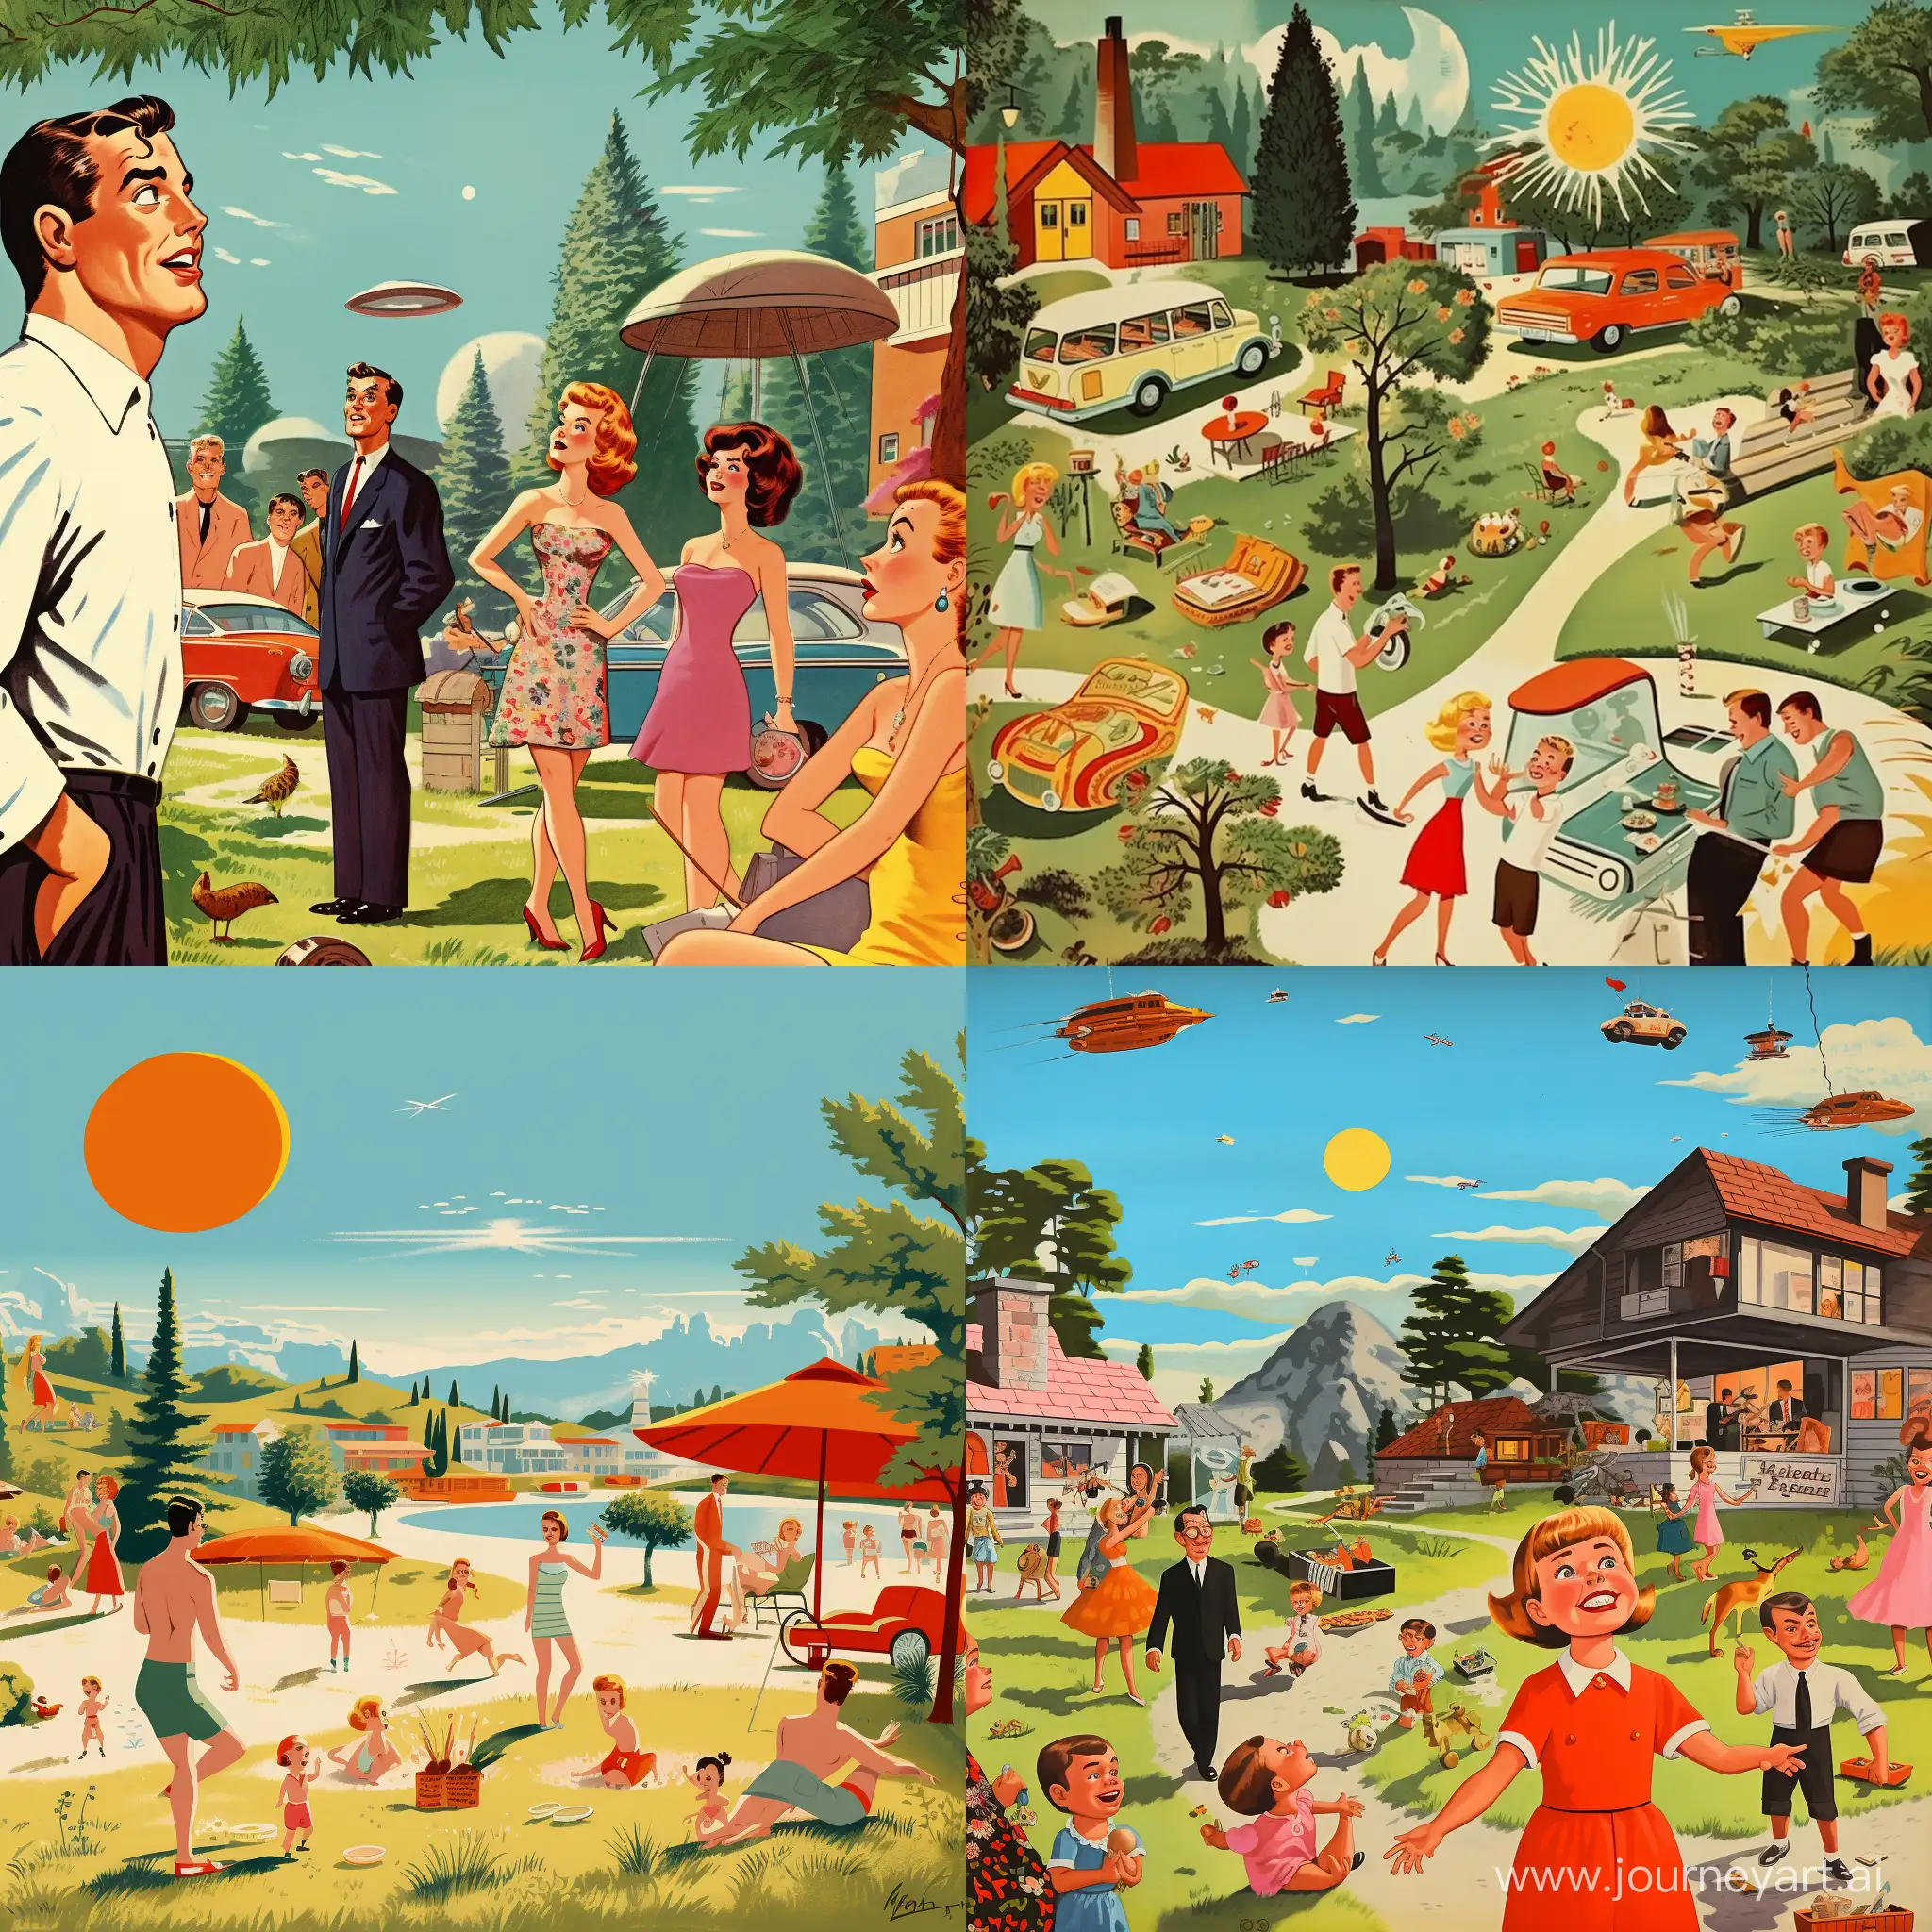 Cheerful-1960s-Cartoon-Scene-with-Vibrant-Colors